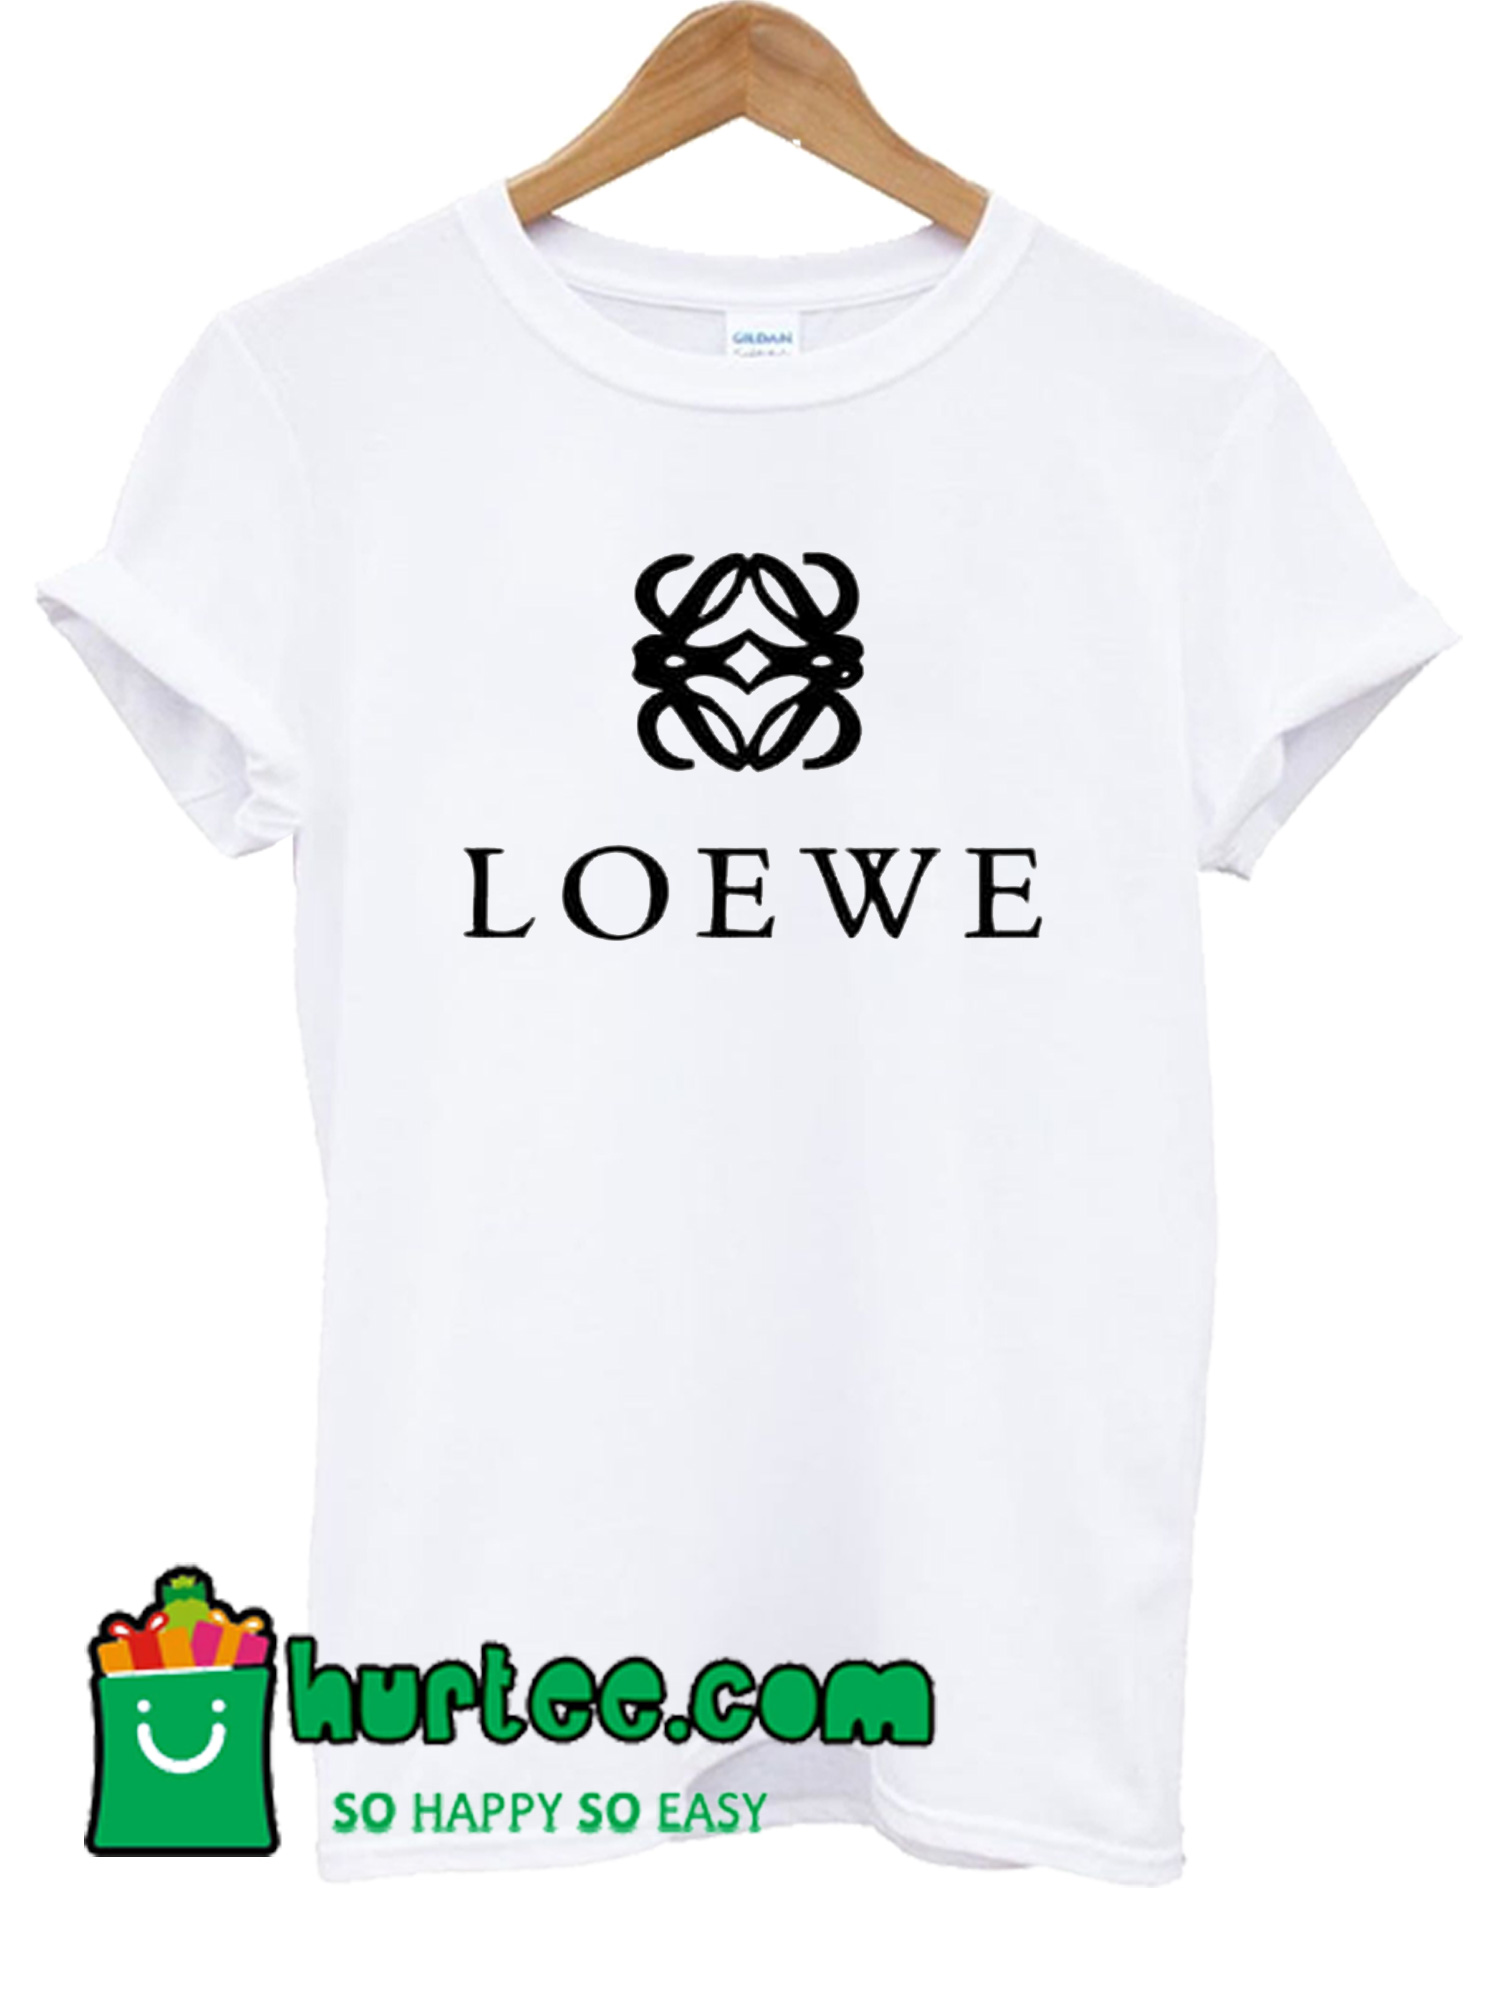 Loewe Size Chart